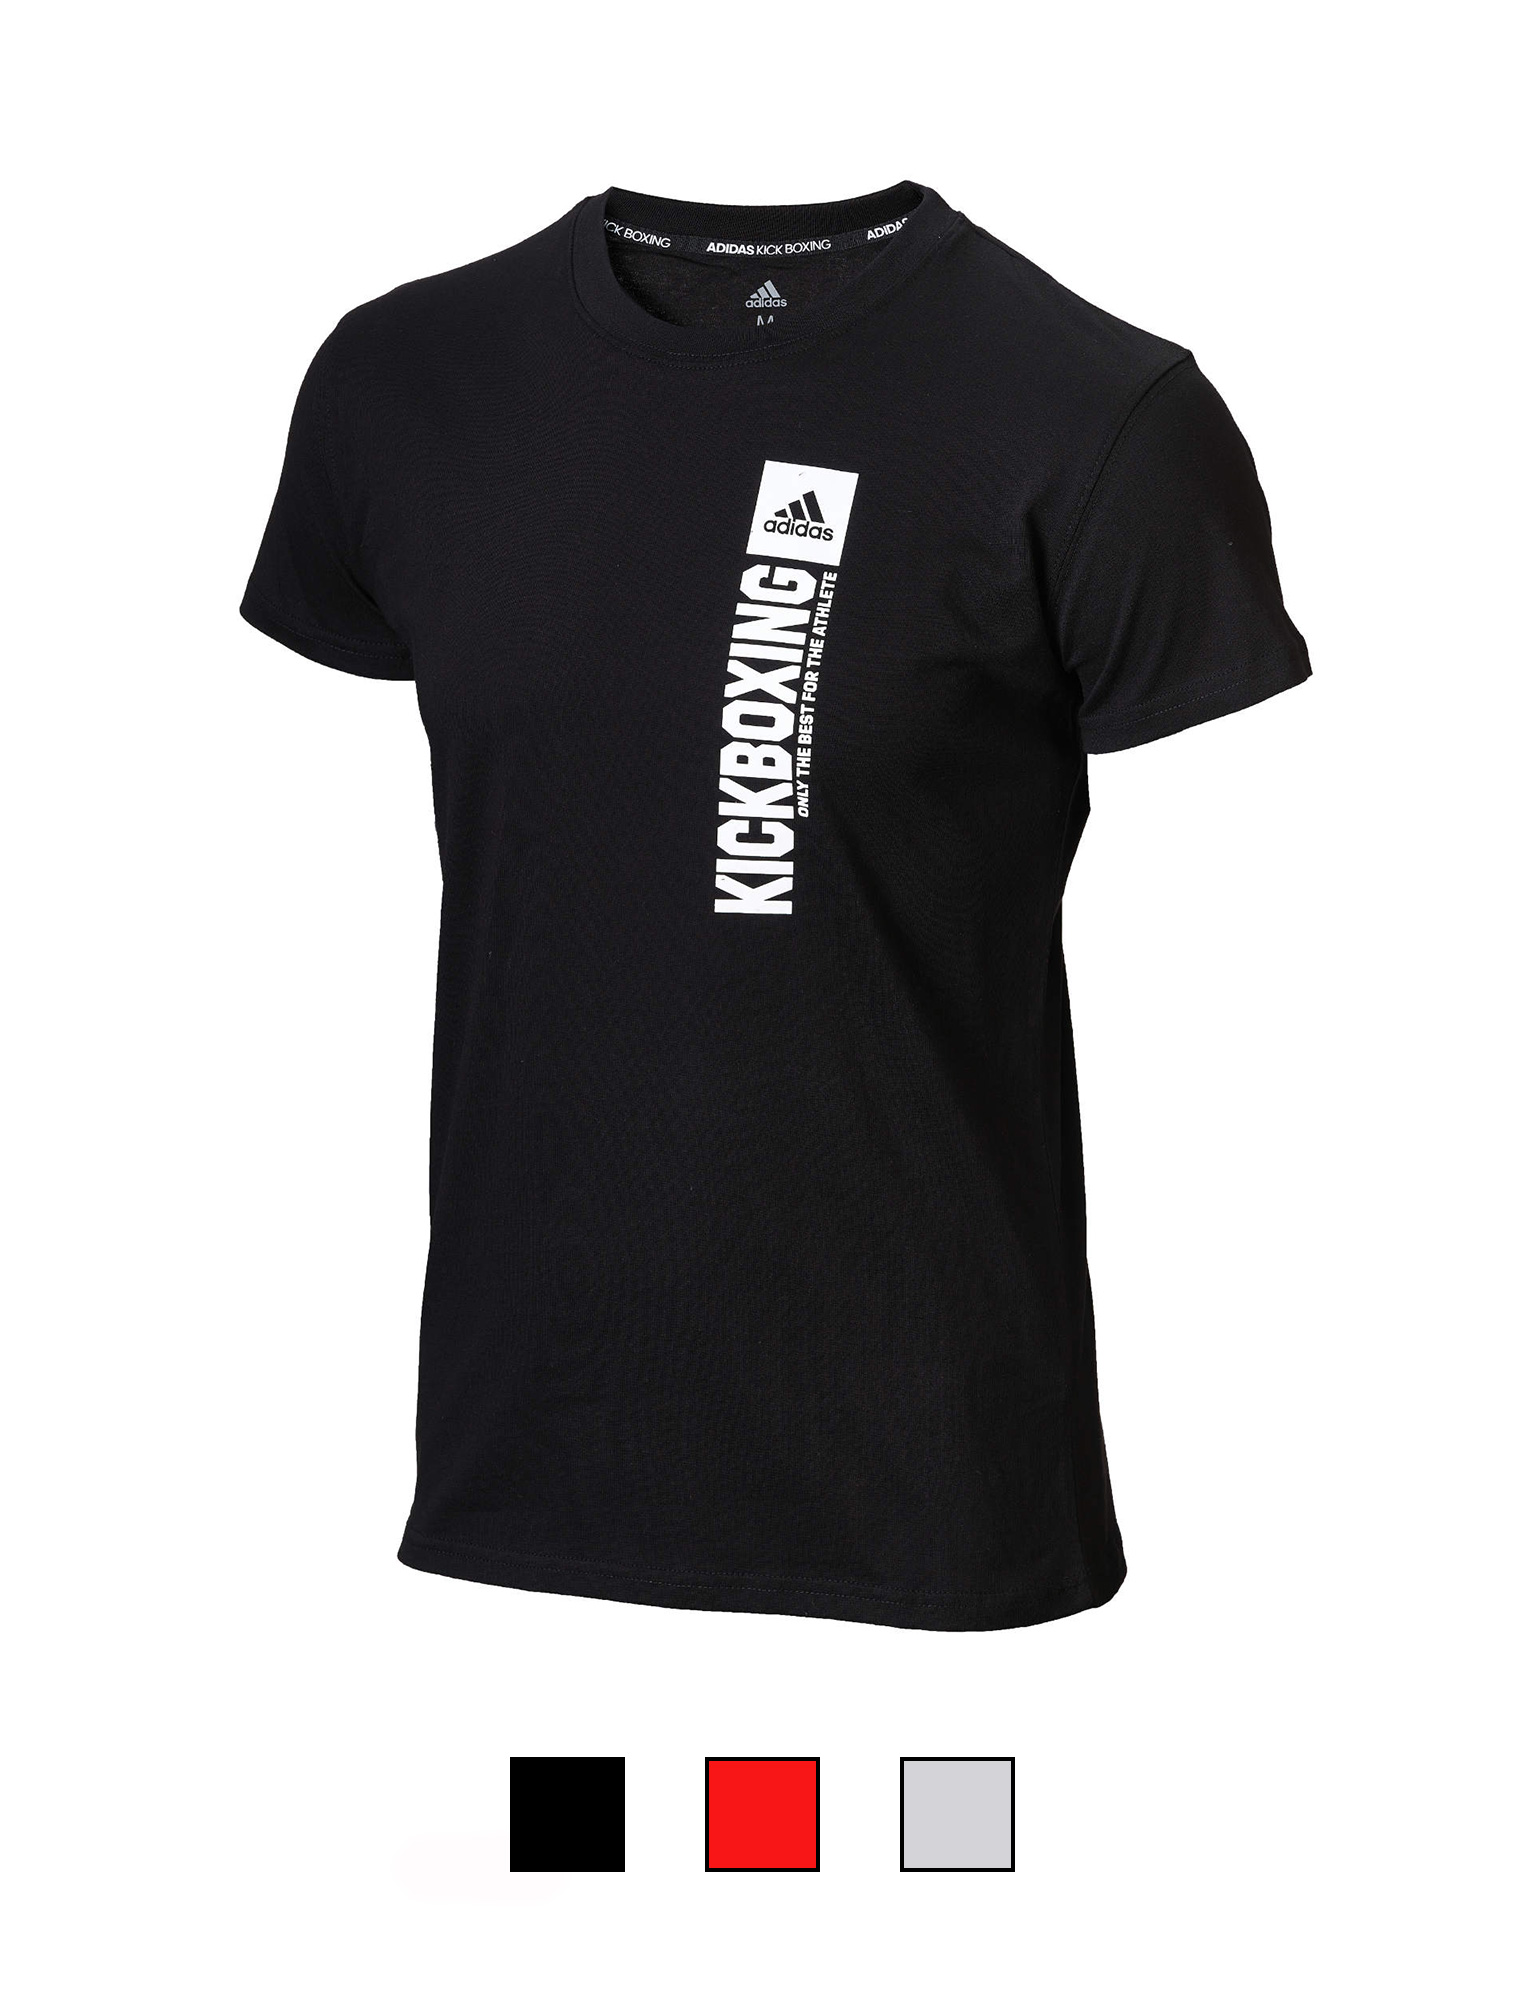 adidas community 22 t-shirt Kickboxing black adiCLTS21V-KB